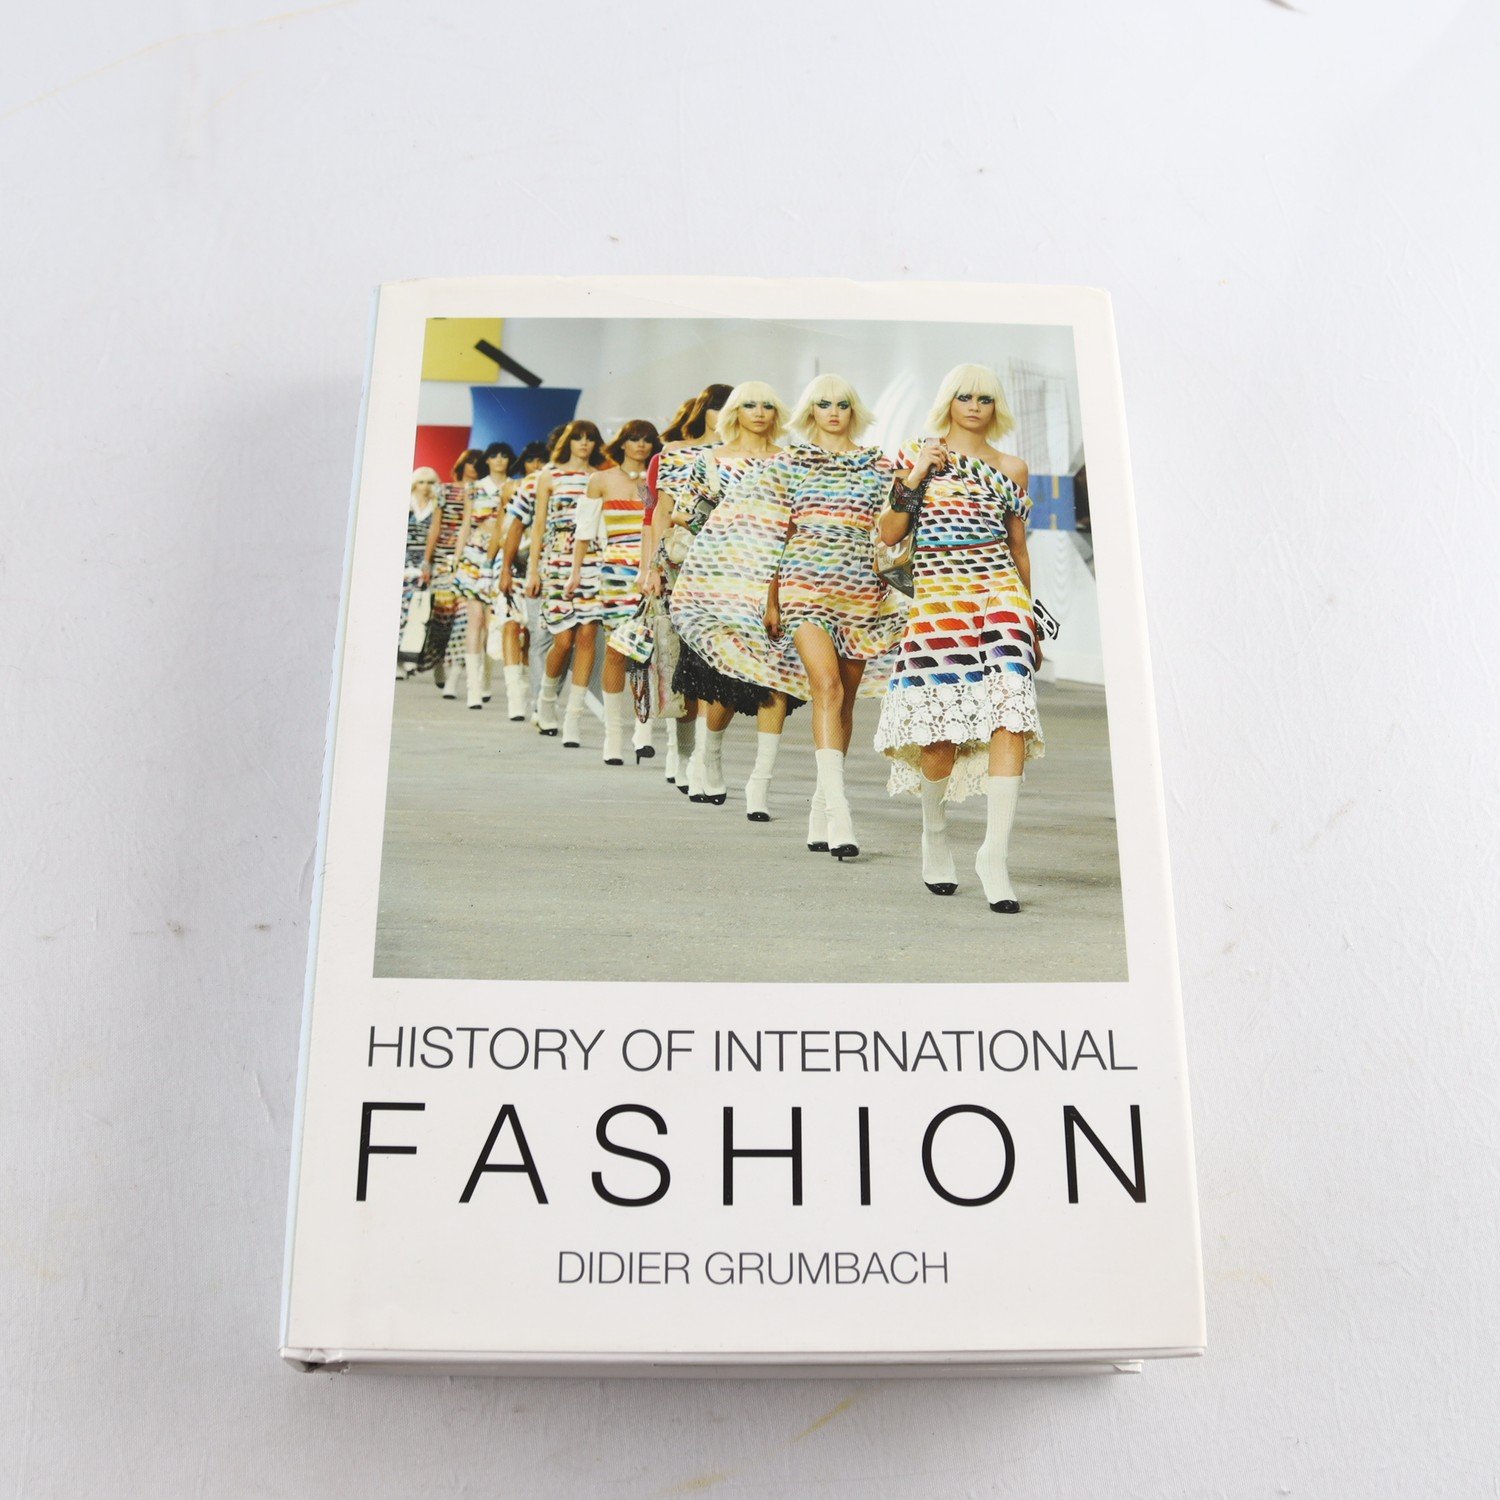 History of International Fashion, Didier Grumbach